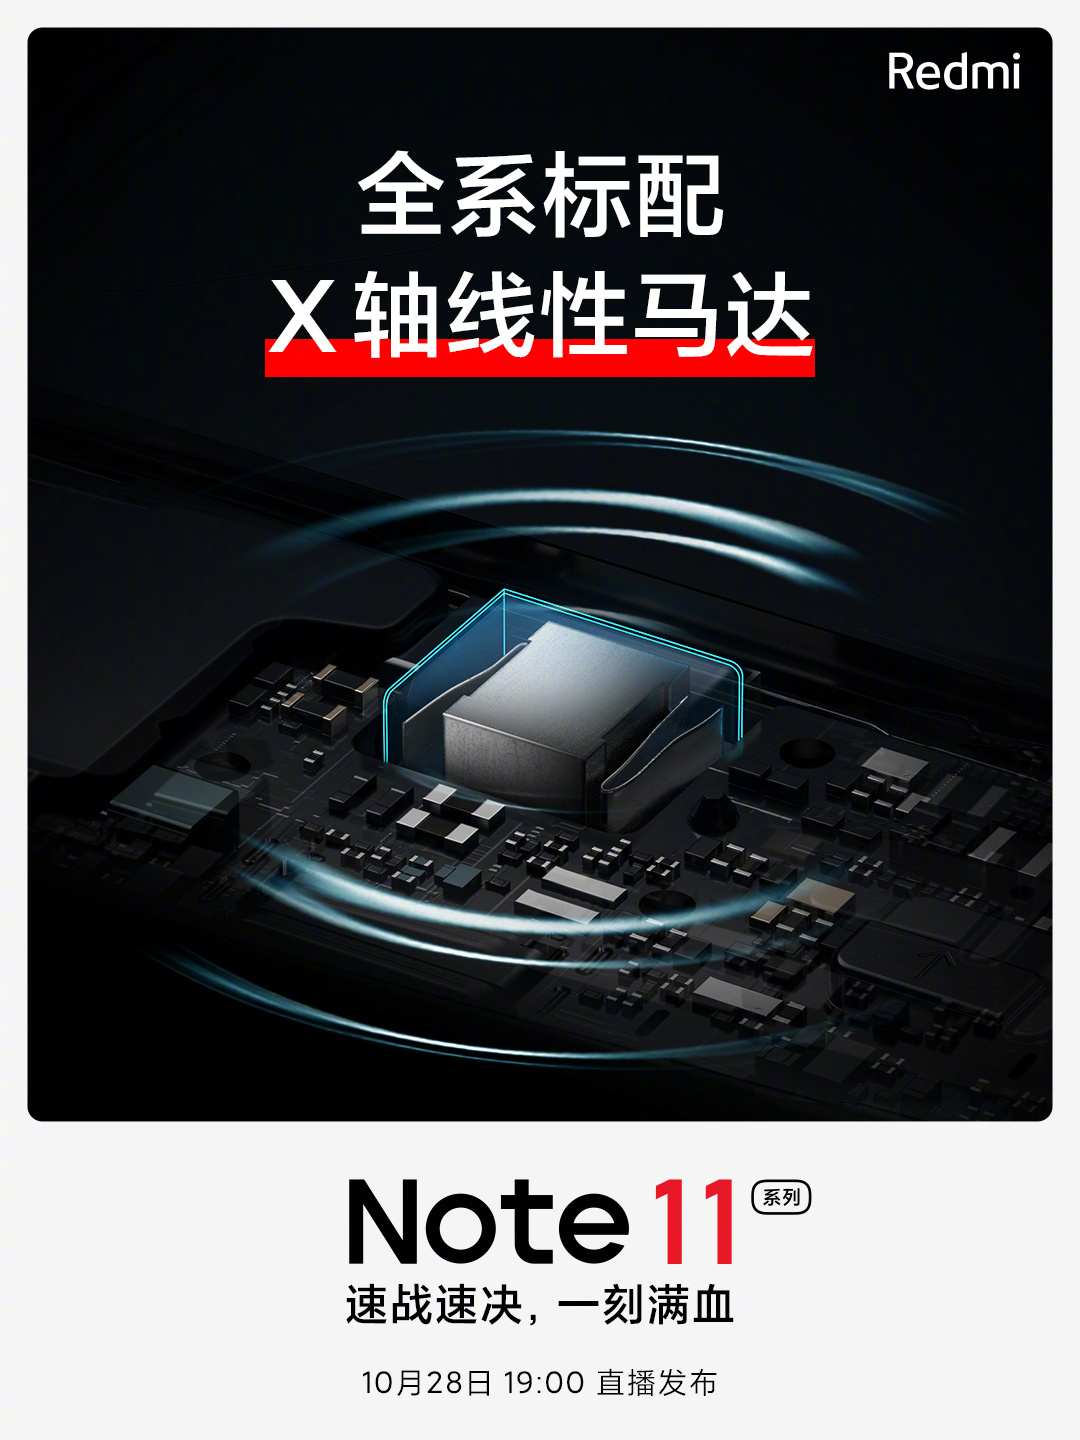  Xiaomi тизерит мощность чипа и другие крутые особенности Redmi Note 11 Другие устройства  - xiaomi_tizerit_mosch_chipseta_i_drugie_krutye_fishki_redmi_note_11_2